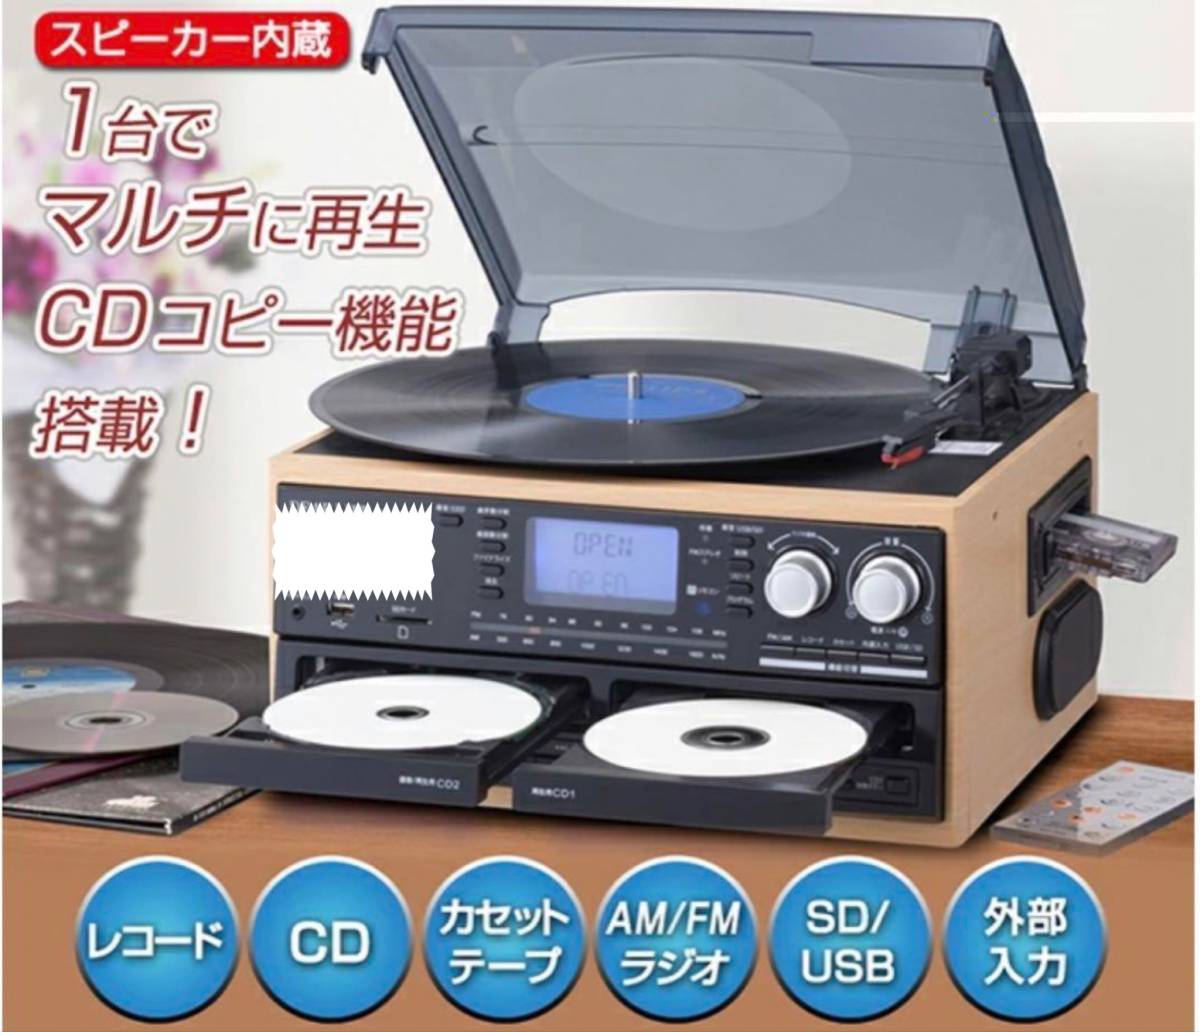 A321 美品 動確済 Bearmax CDコピー機能搭載 リモコン付 マルチオーディオレコーダープレーヤー MA-29W レコード USB SD LP ラジオ AMFM CD_イメージ図 2枚目以降が出品物になります